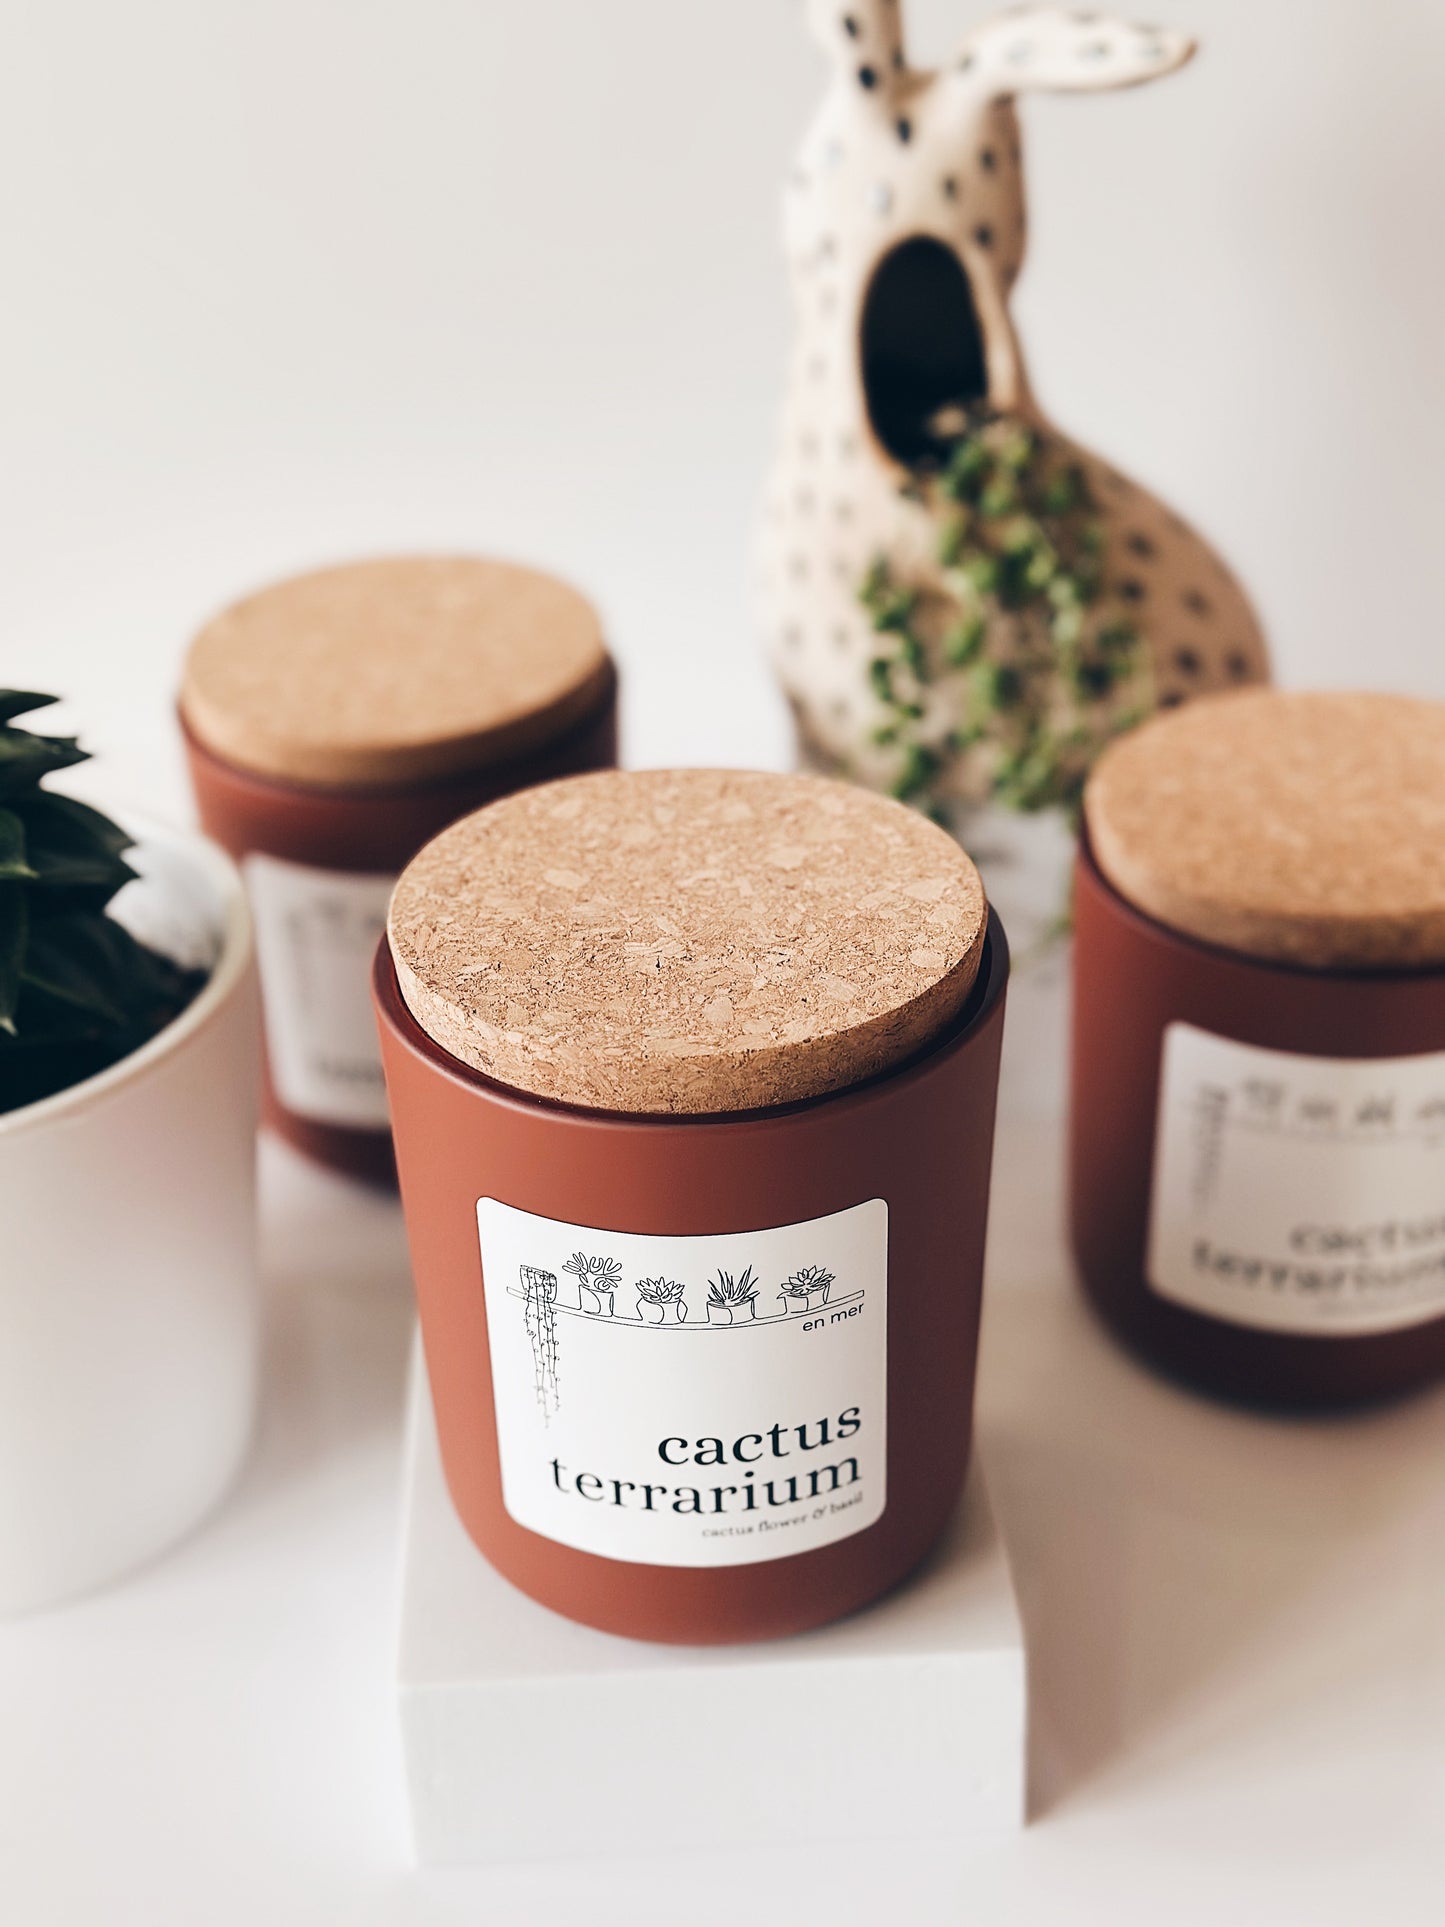 en mer LTD | cactus terrarium | limited batch soy wax candle